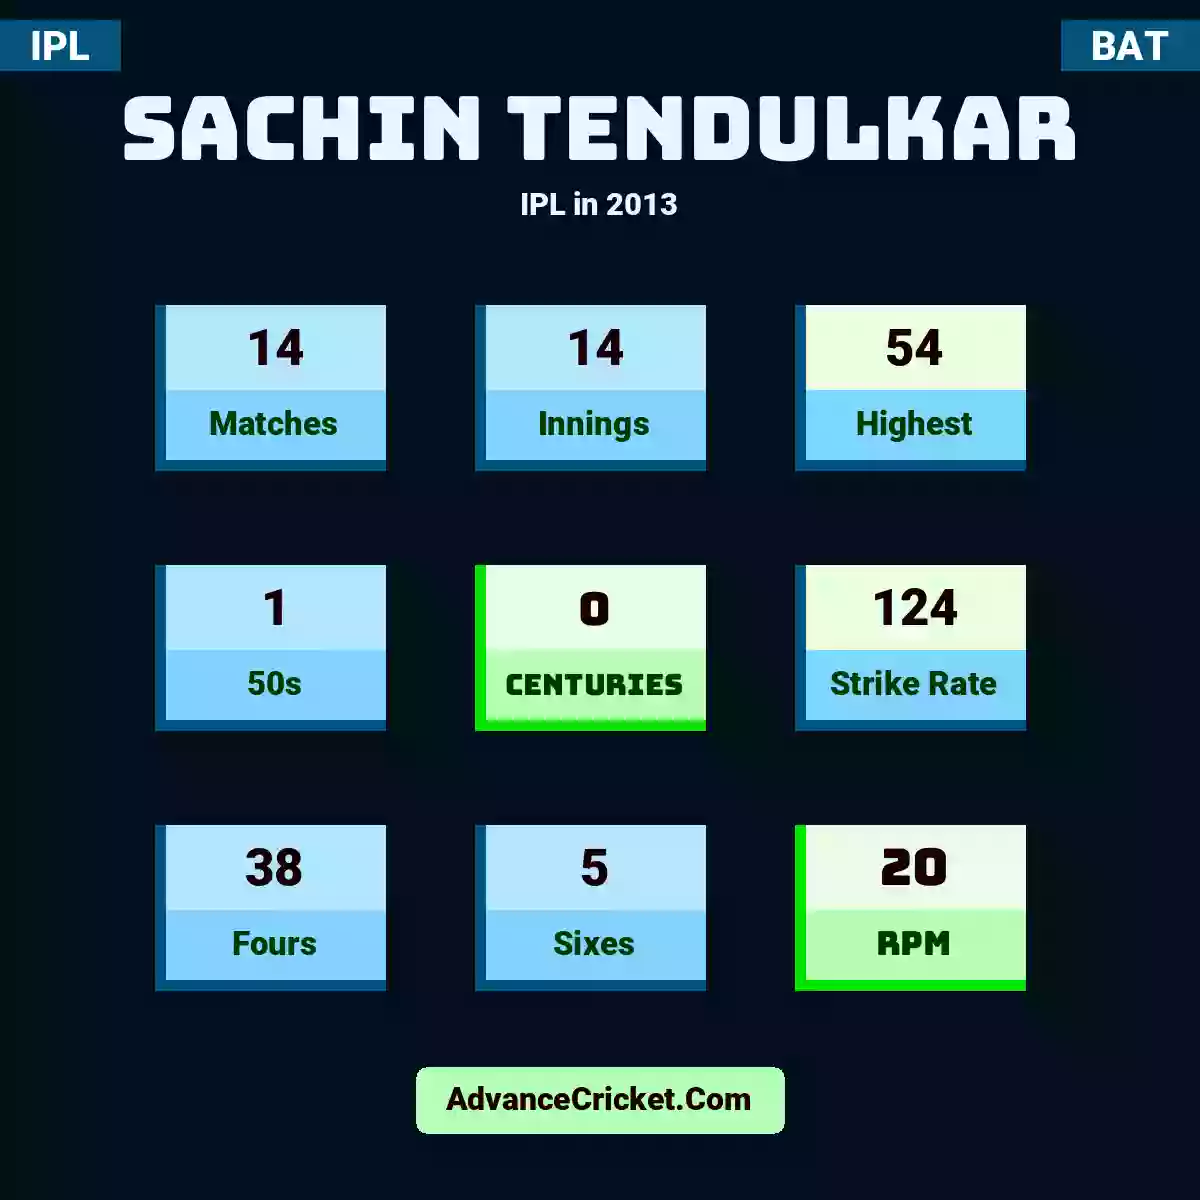 Sachin Tendulkar IPL  in 2013, Sachin Tendulkar played 14 matches, scored 54 runs as highest, 1 half-centuries, and 0 centuries, with a strike rate of 124. S.Tendulkar hit 38 fours and 5 sixes, with an RPM of 20.